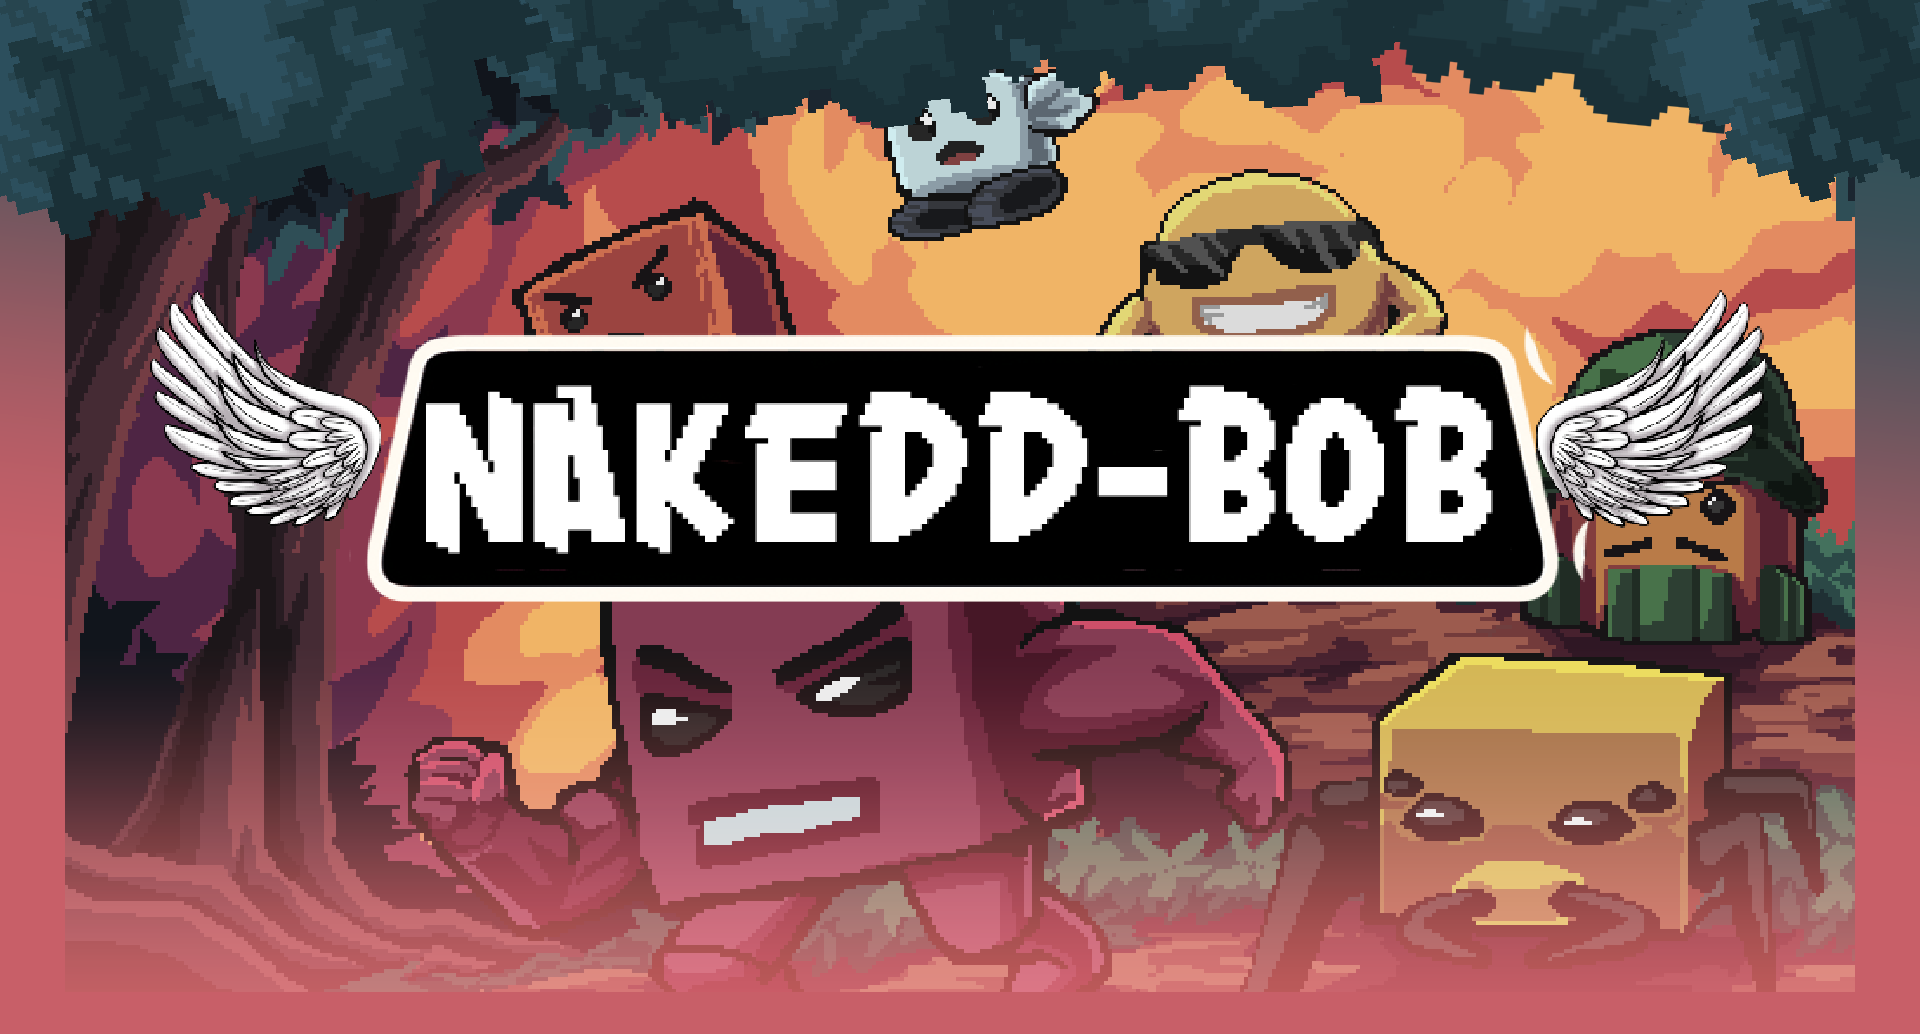 Nakedd-Bob